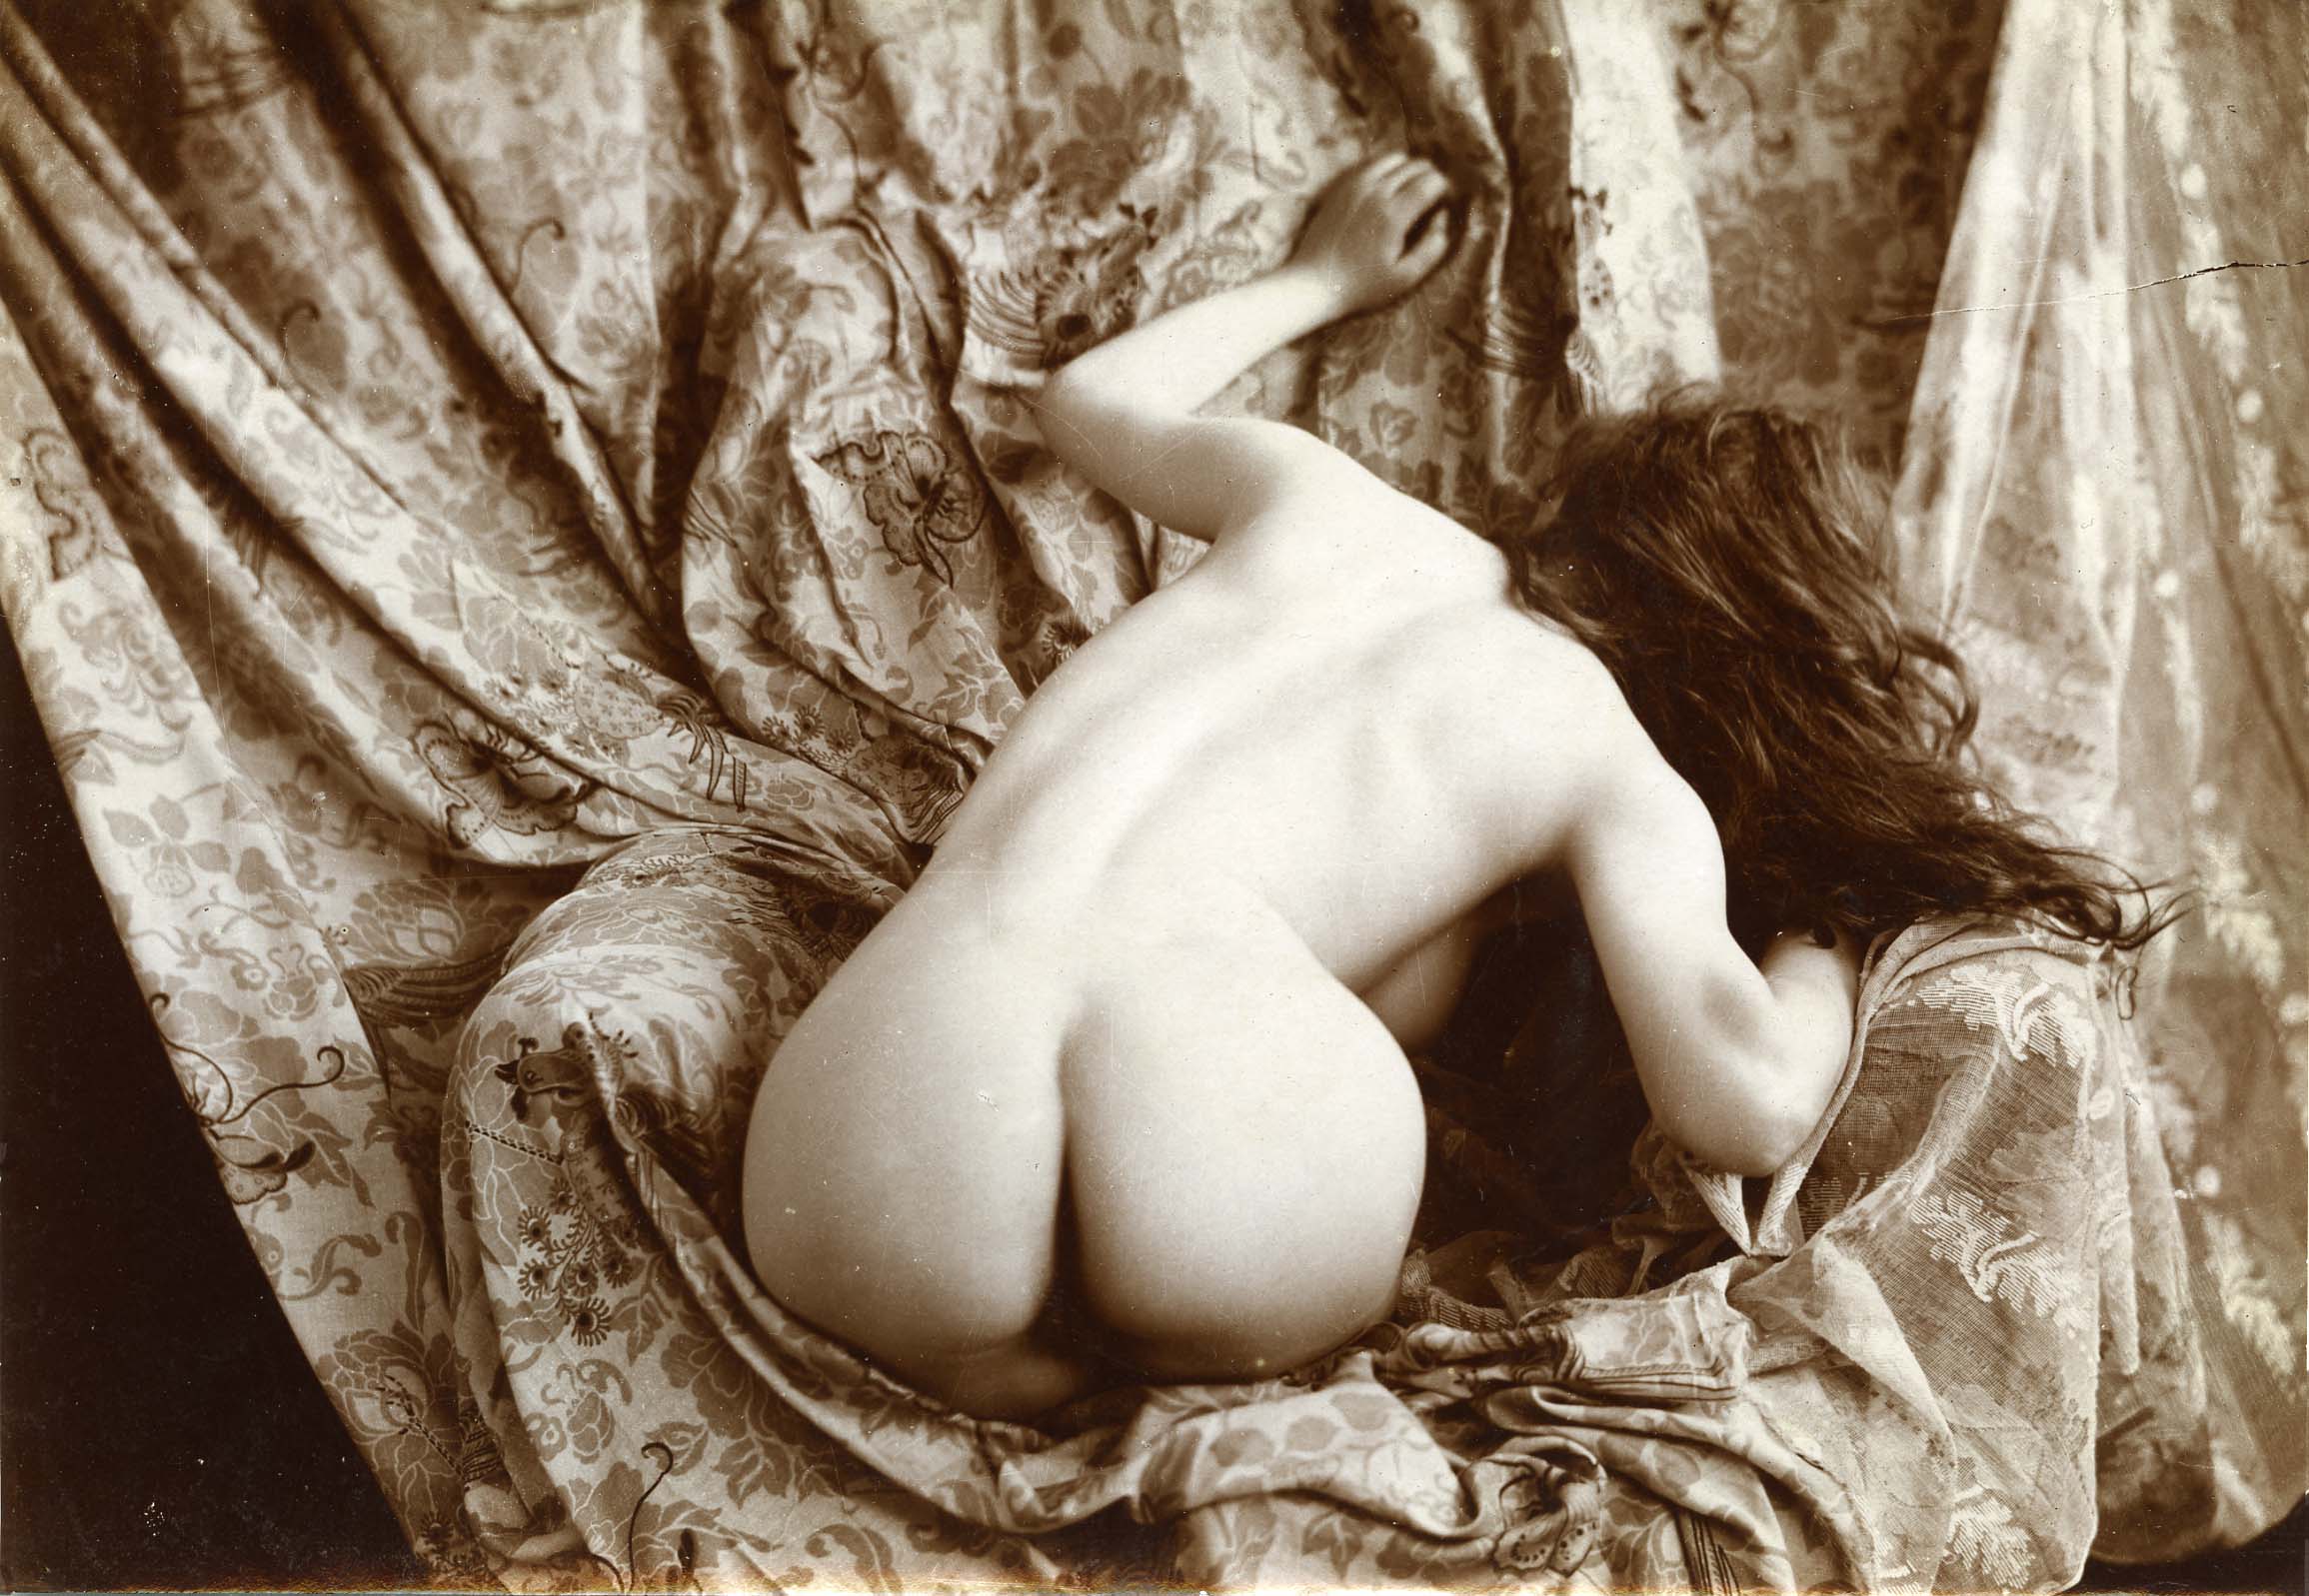 Photographs naked women